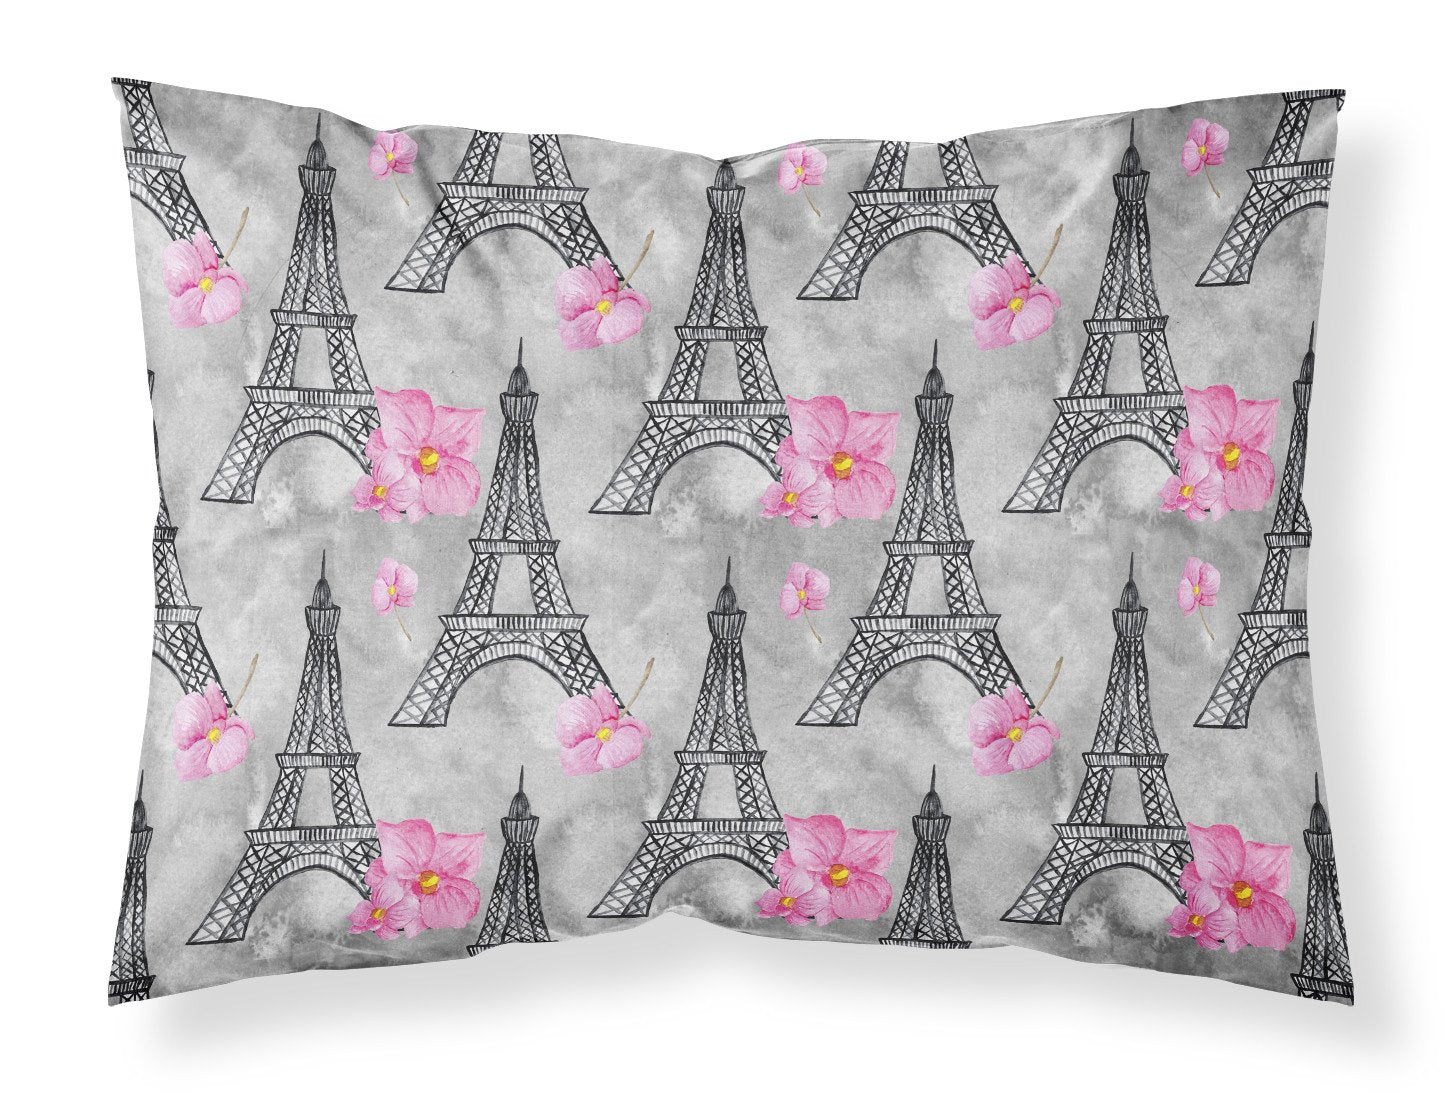 Watercolor Pink Flowers Eiffel Tower Fabric Standard Pillowcase BB7503PILLOWCASE by Caroline's Treasures